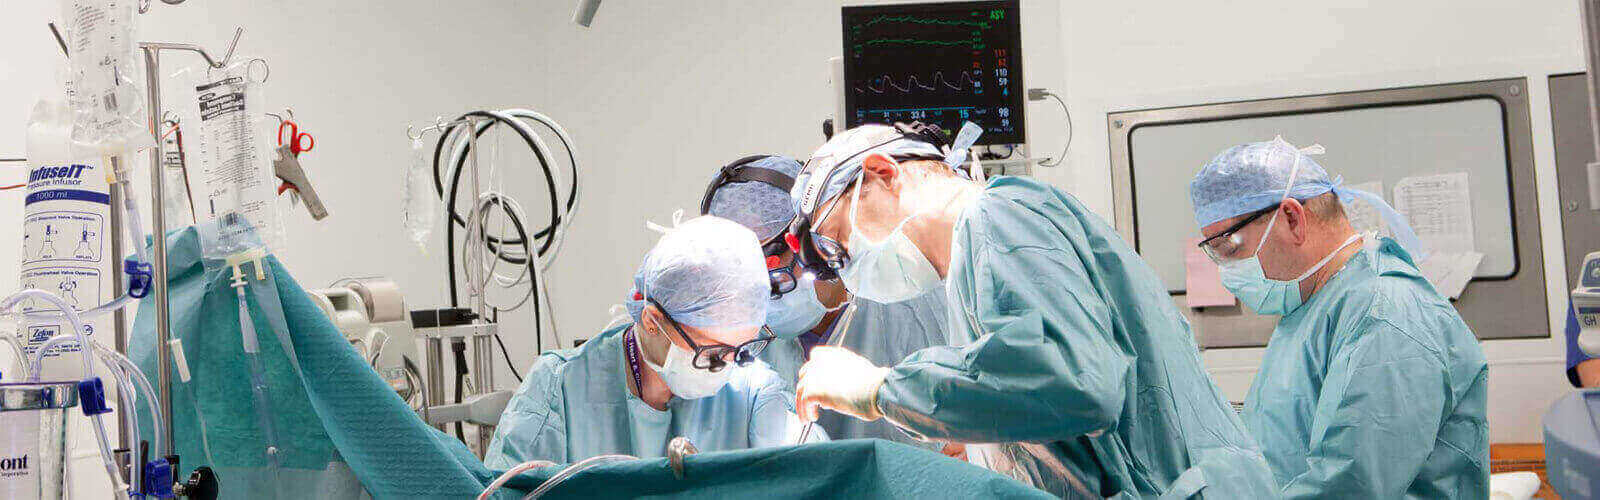 Heart Surgery Or Cardiac Surgery in Texas